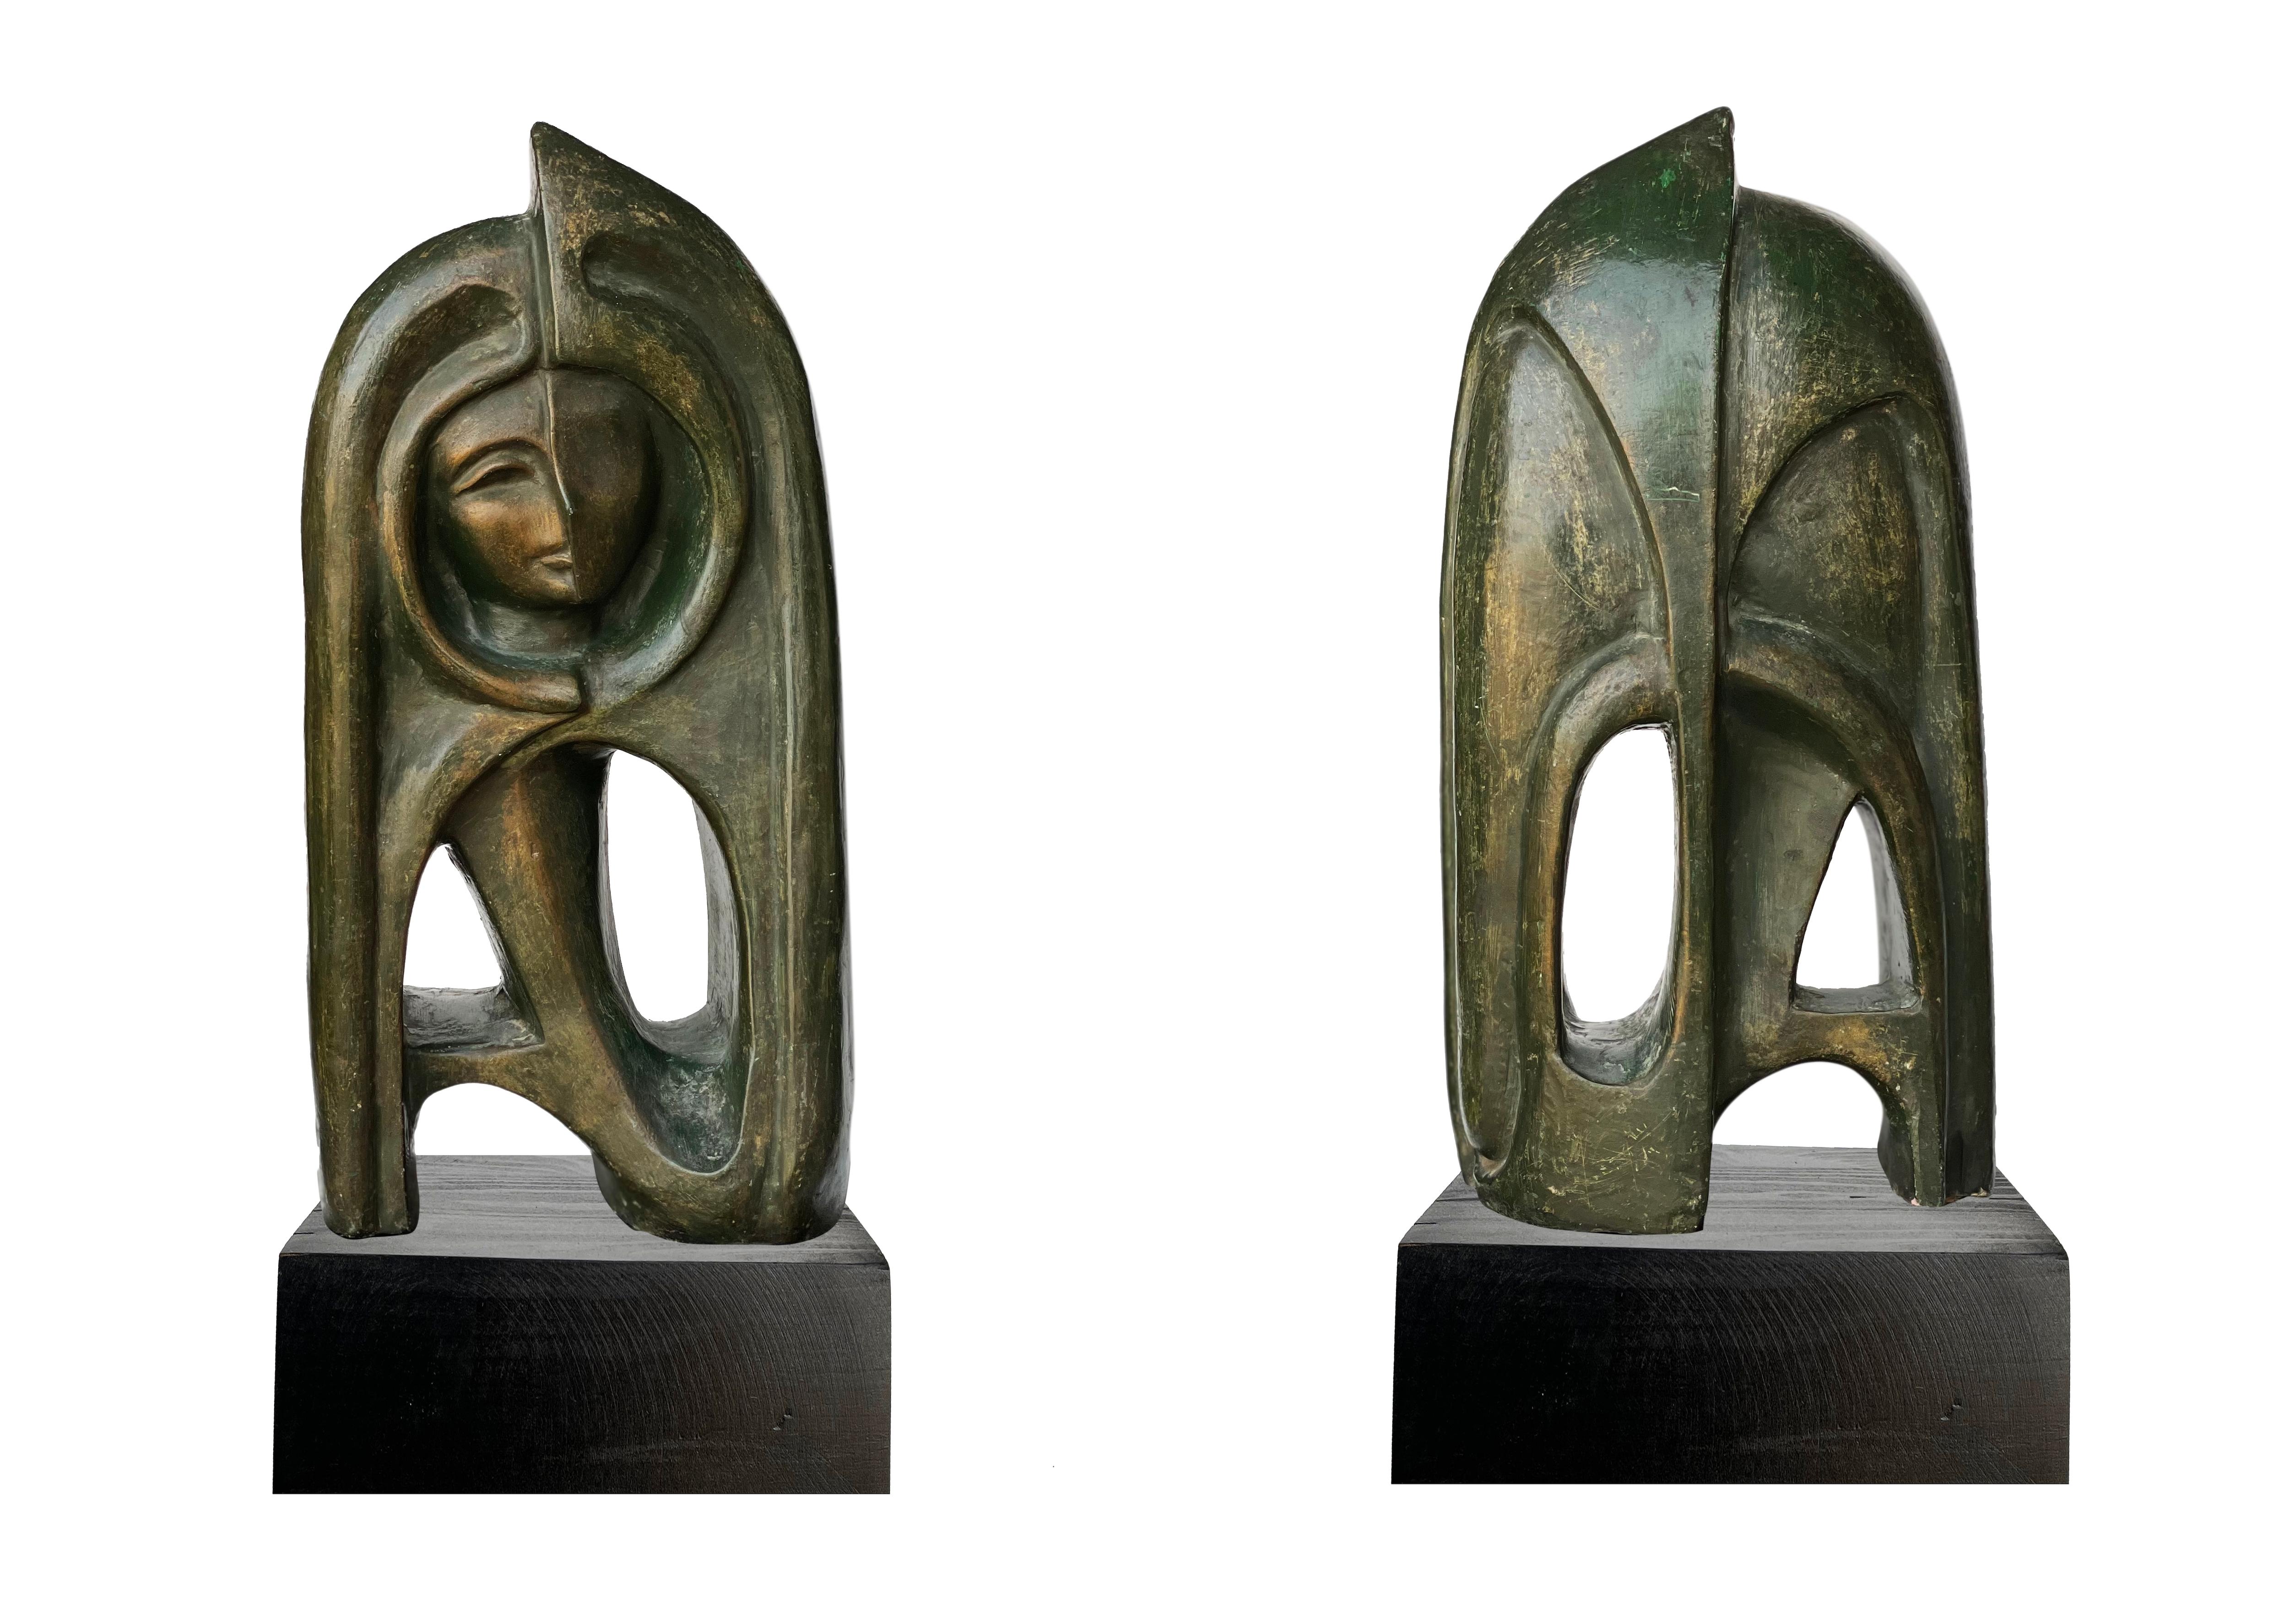 Ibrahim Abd Elmalak - "Abstract Visage I" Sculpture 18" x 8" inch by  Ibrahim Abd Elmalak For Sale at 1stDibs